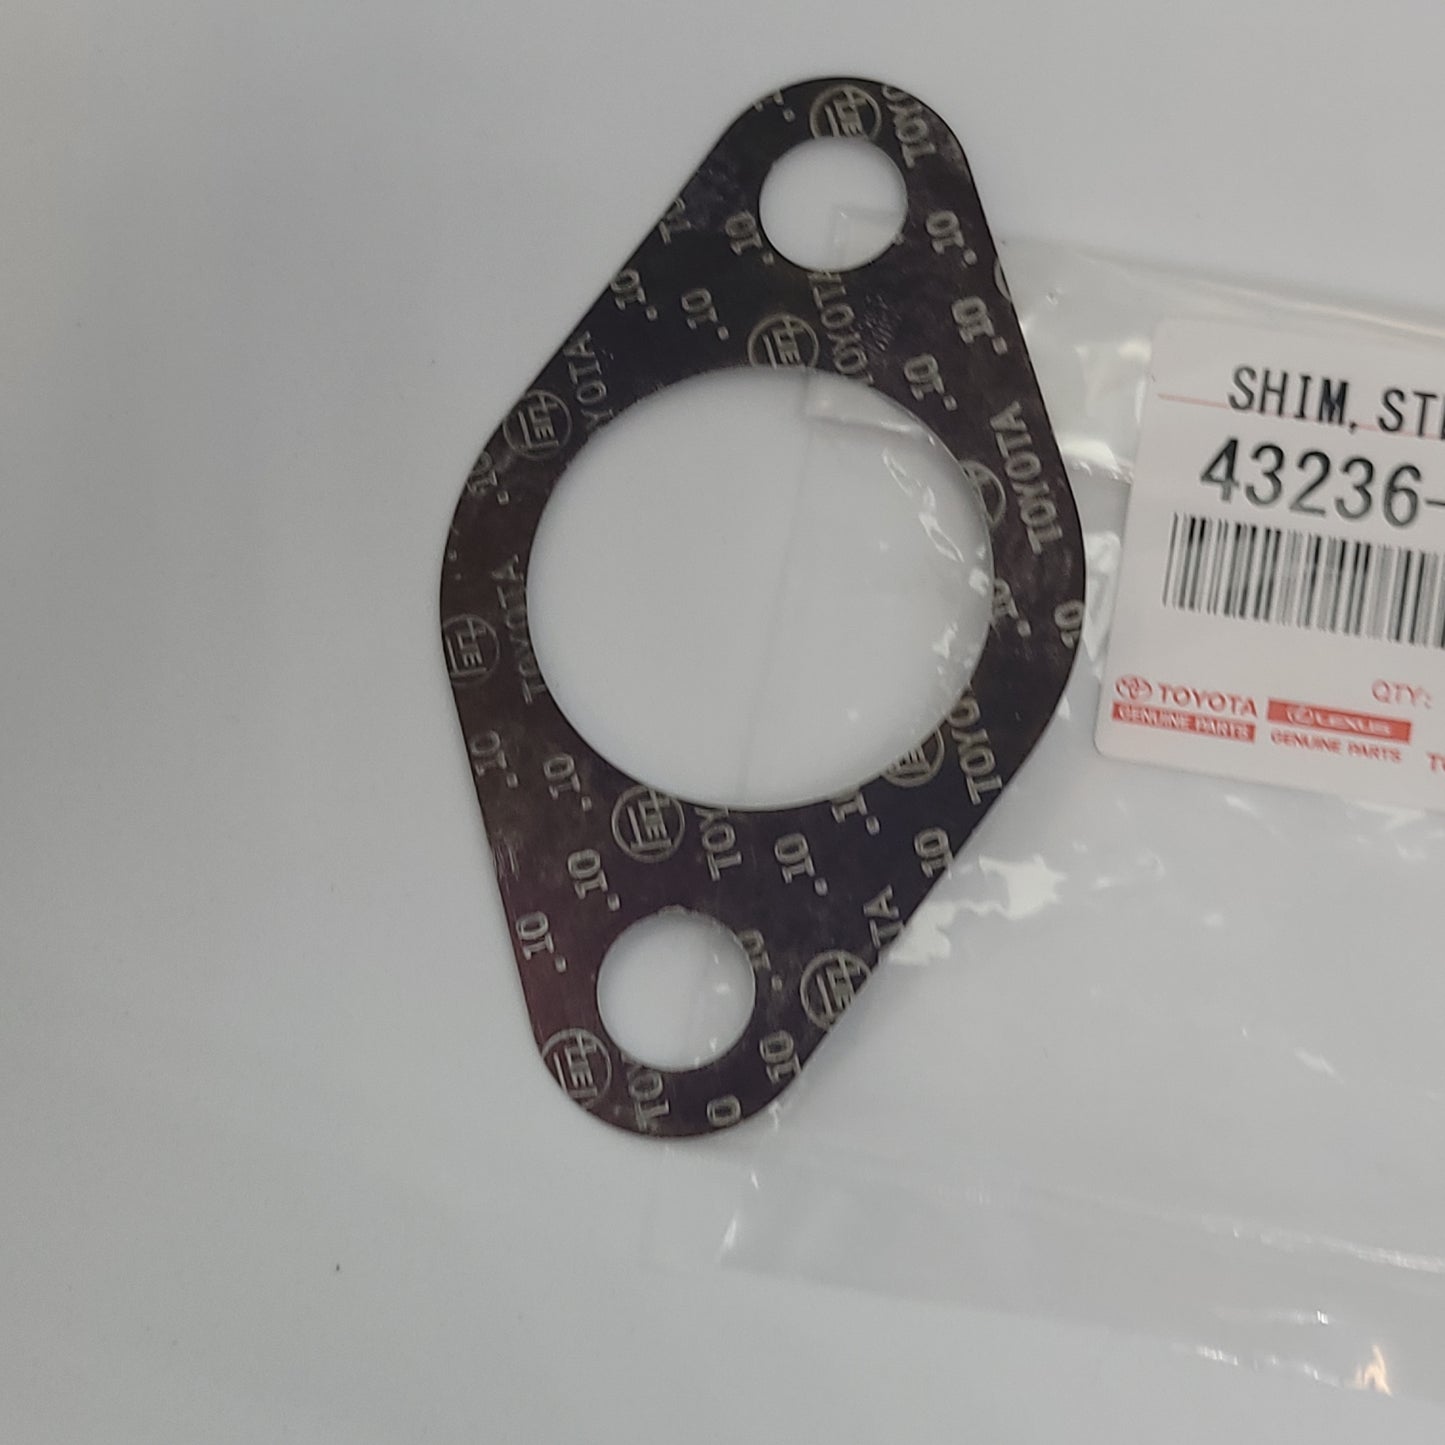 Genuine shim 0.10mm swivel hub Toyota 4323660020